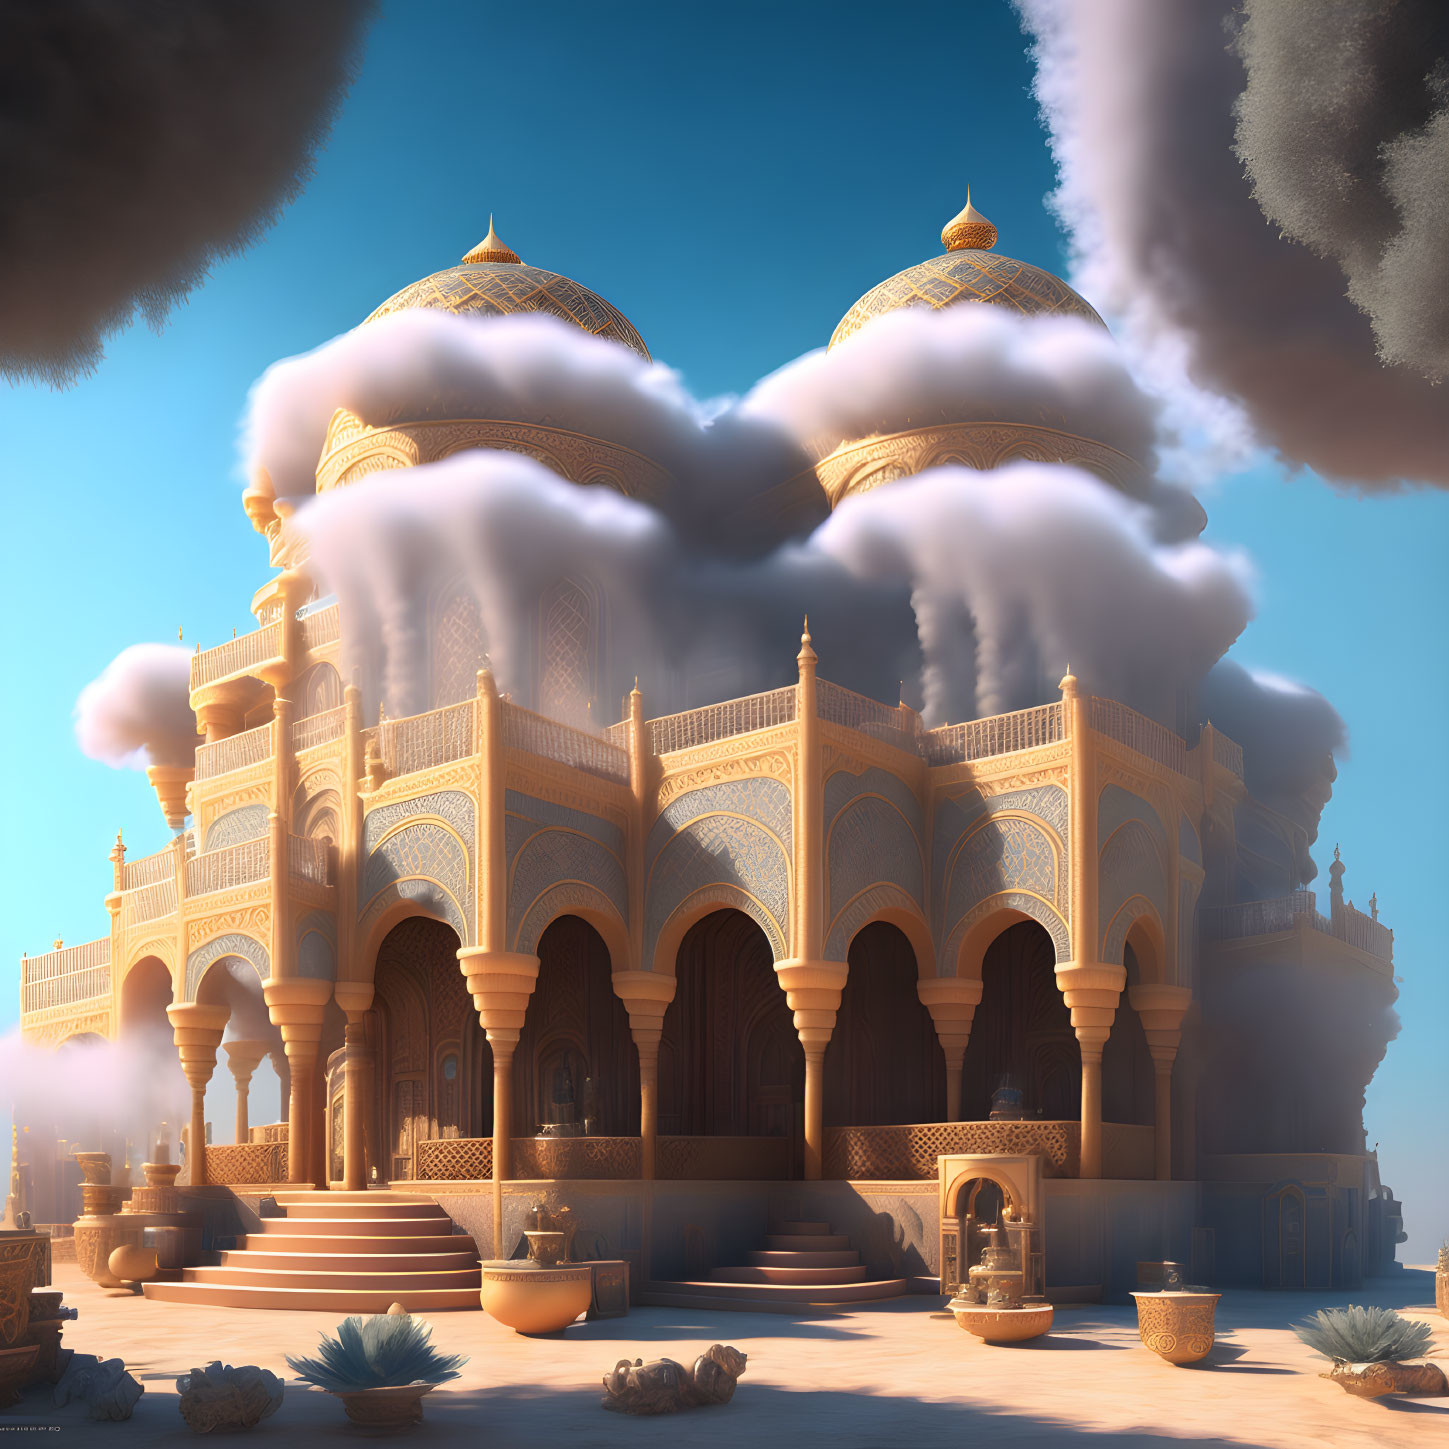 The Cloud Palace